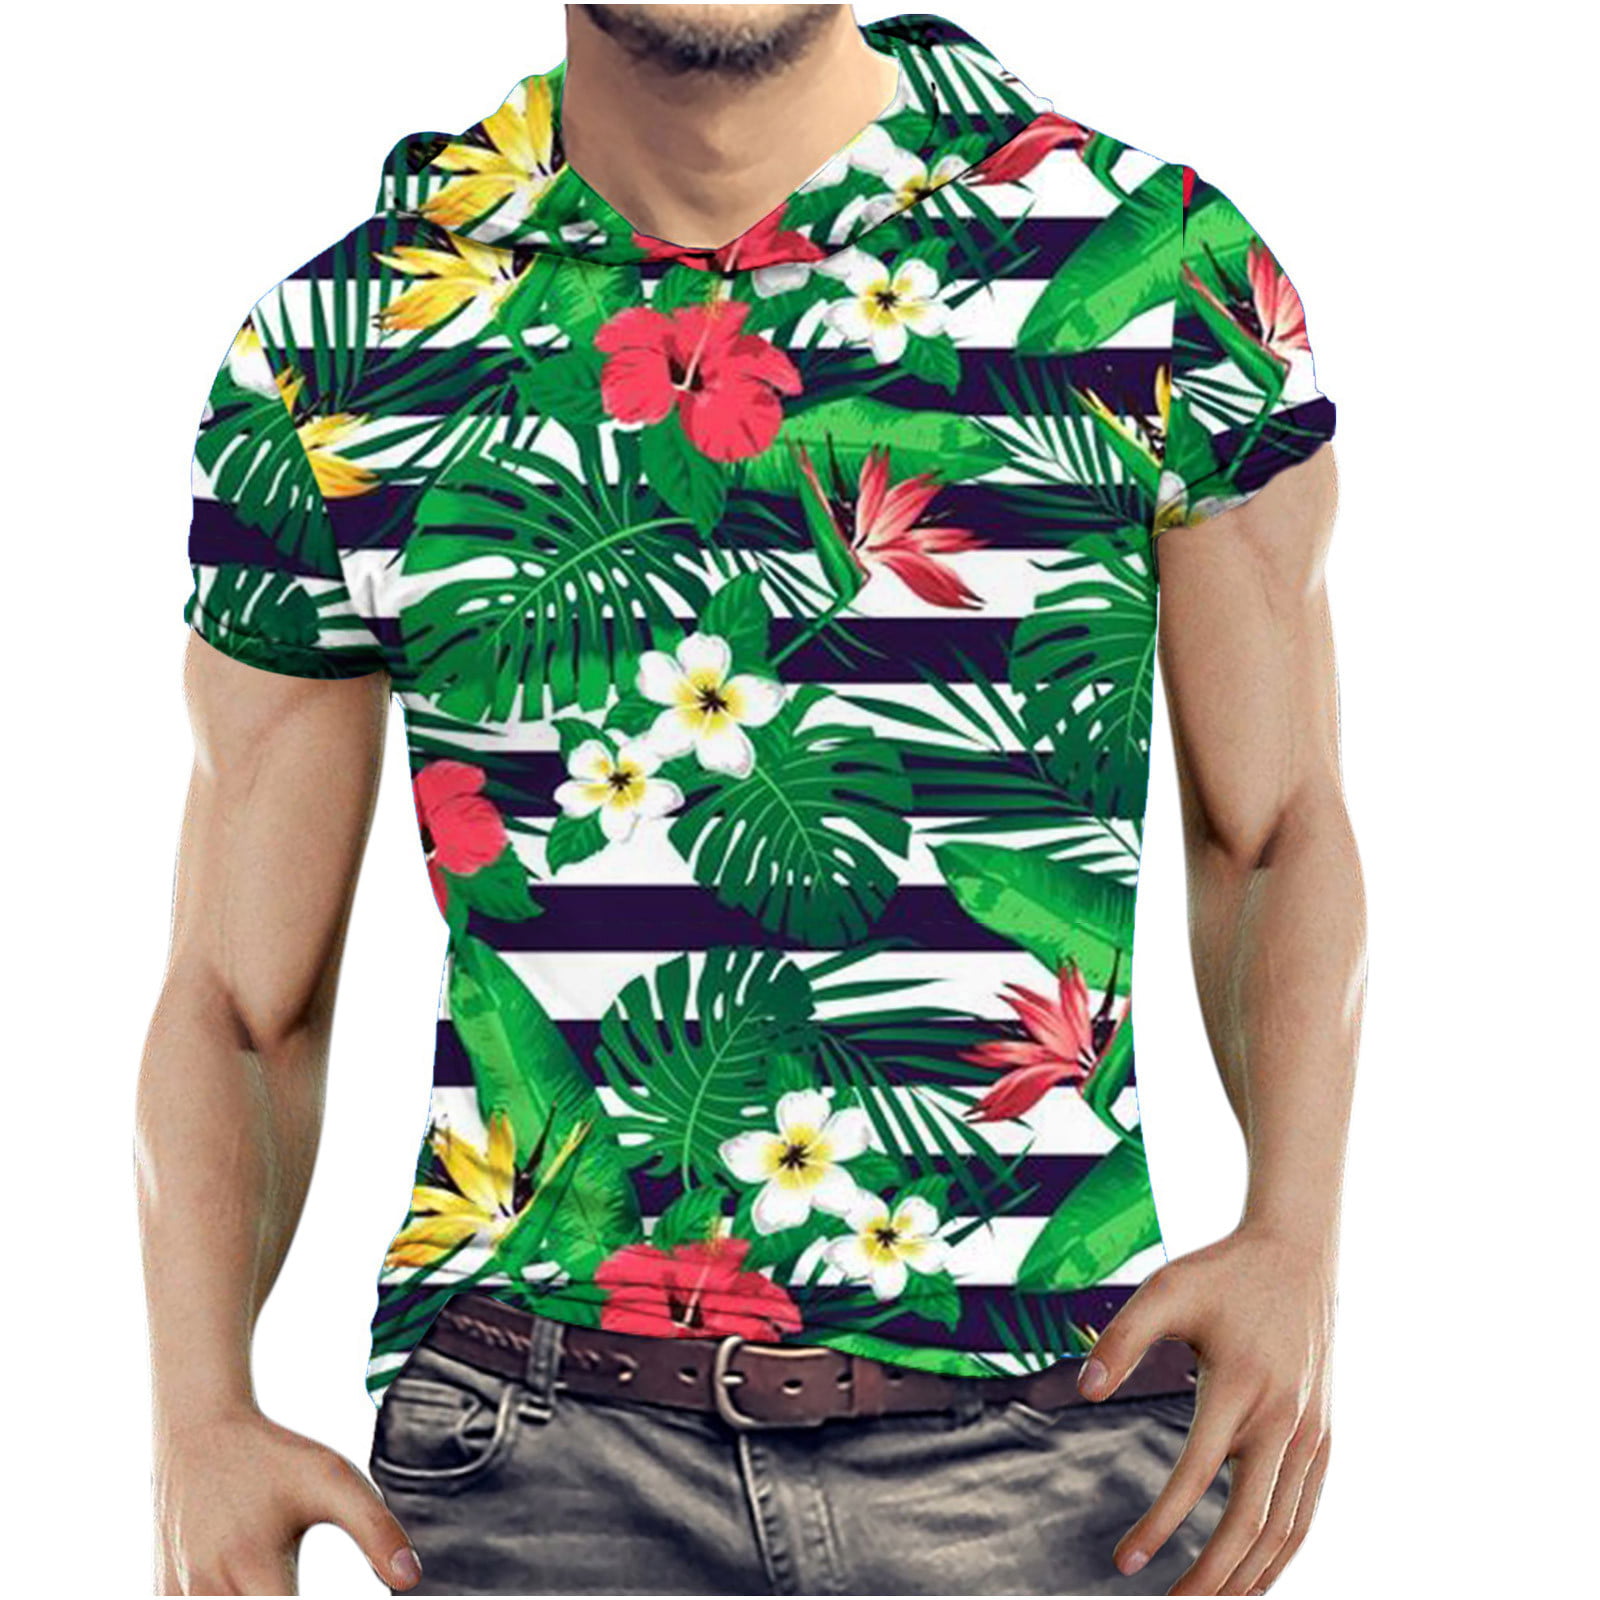 ZCFZJW Mens Casual Summer Hawaiian Shirts Short Sleeve Tropical Floral  Pattern Graphic Hoodie Tee Shirt Lightweight Athletic T-Shirt Tops Green  XXXL 